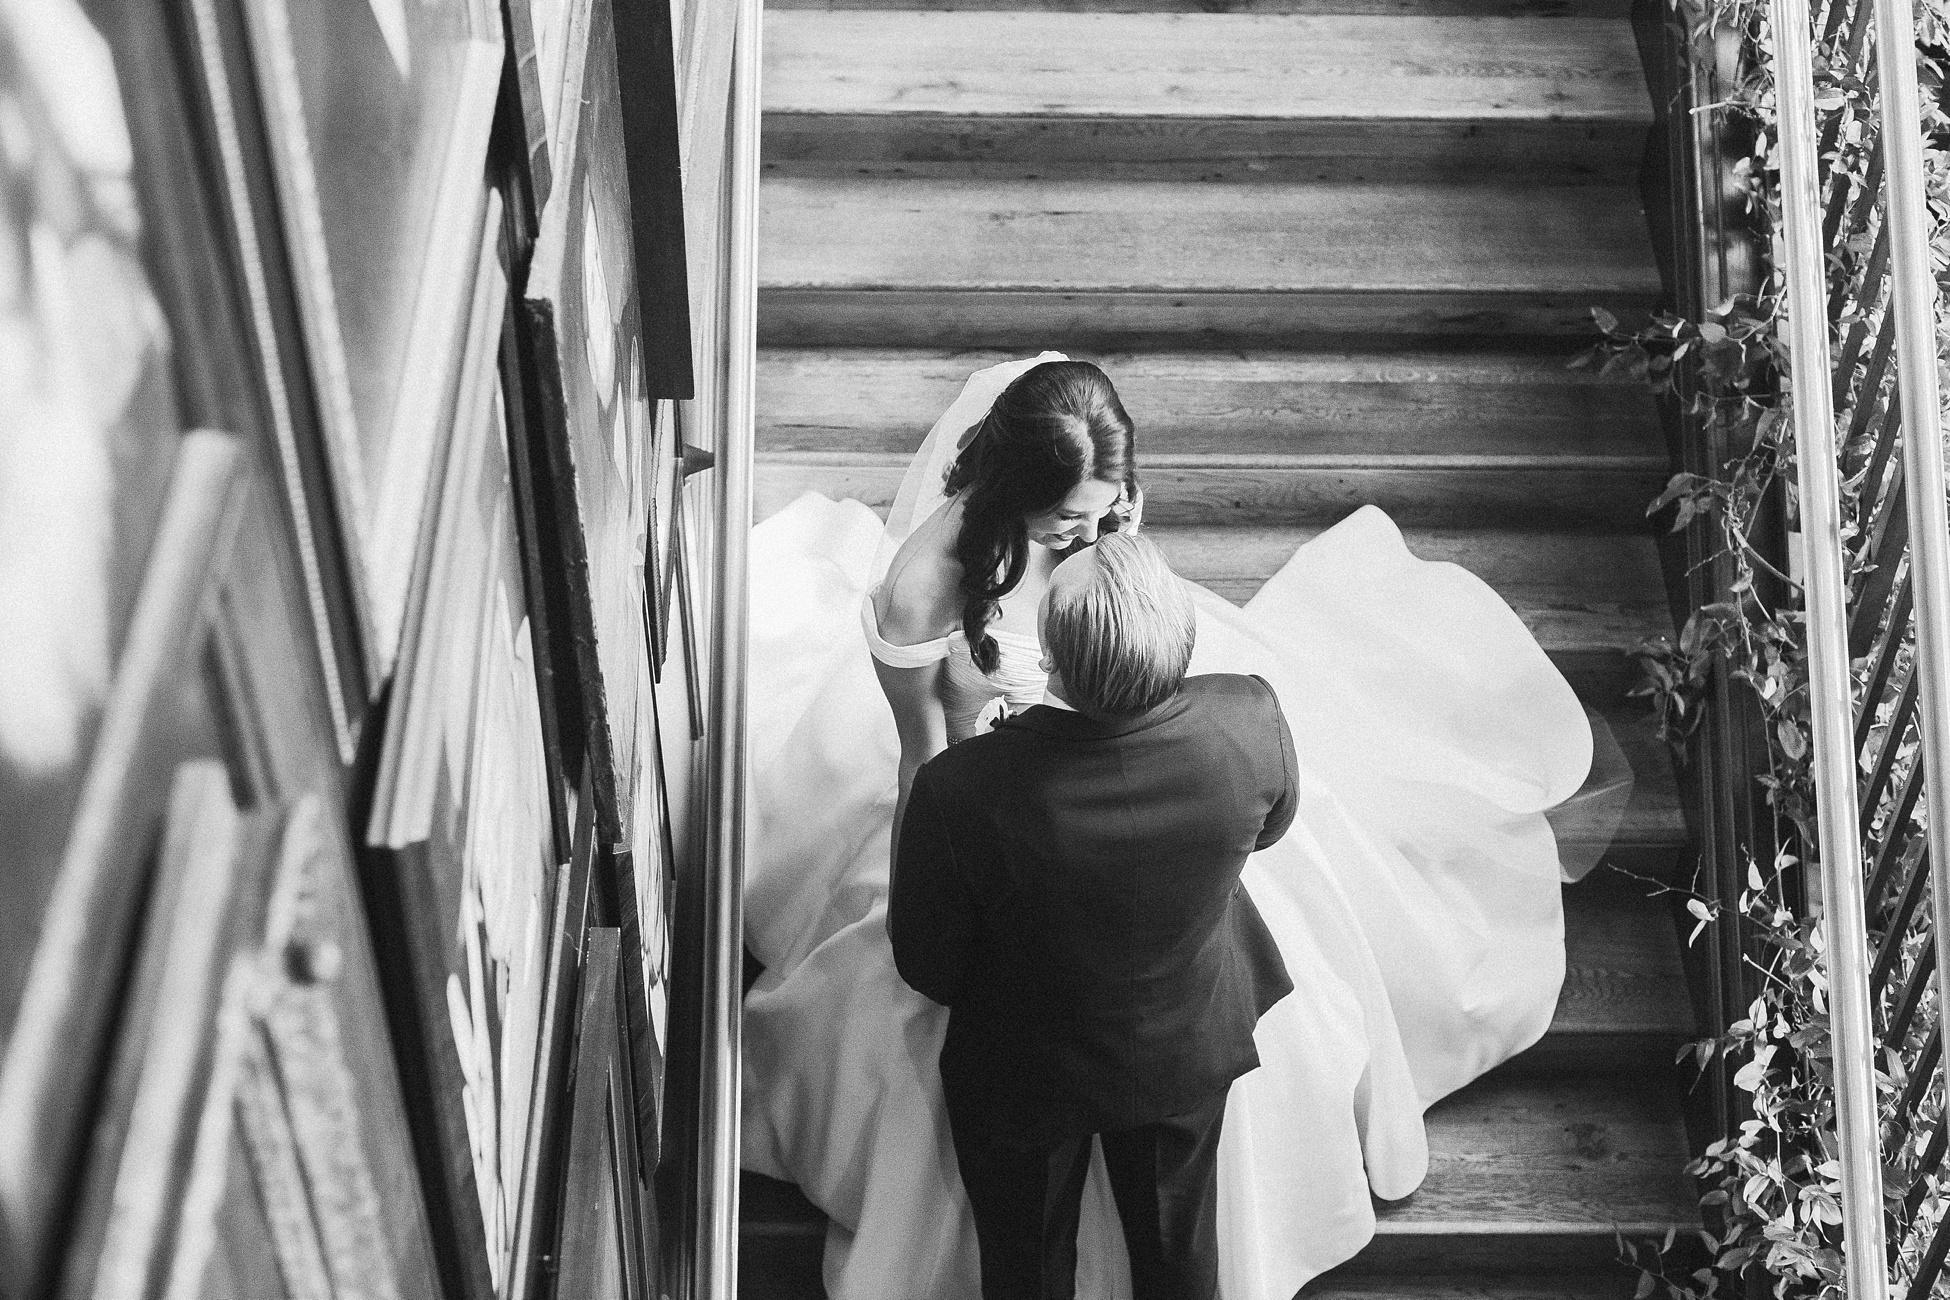 Oxford Exchange Wedding | © Ailyn La Torre Photography 2019